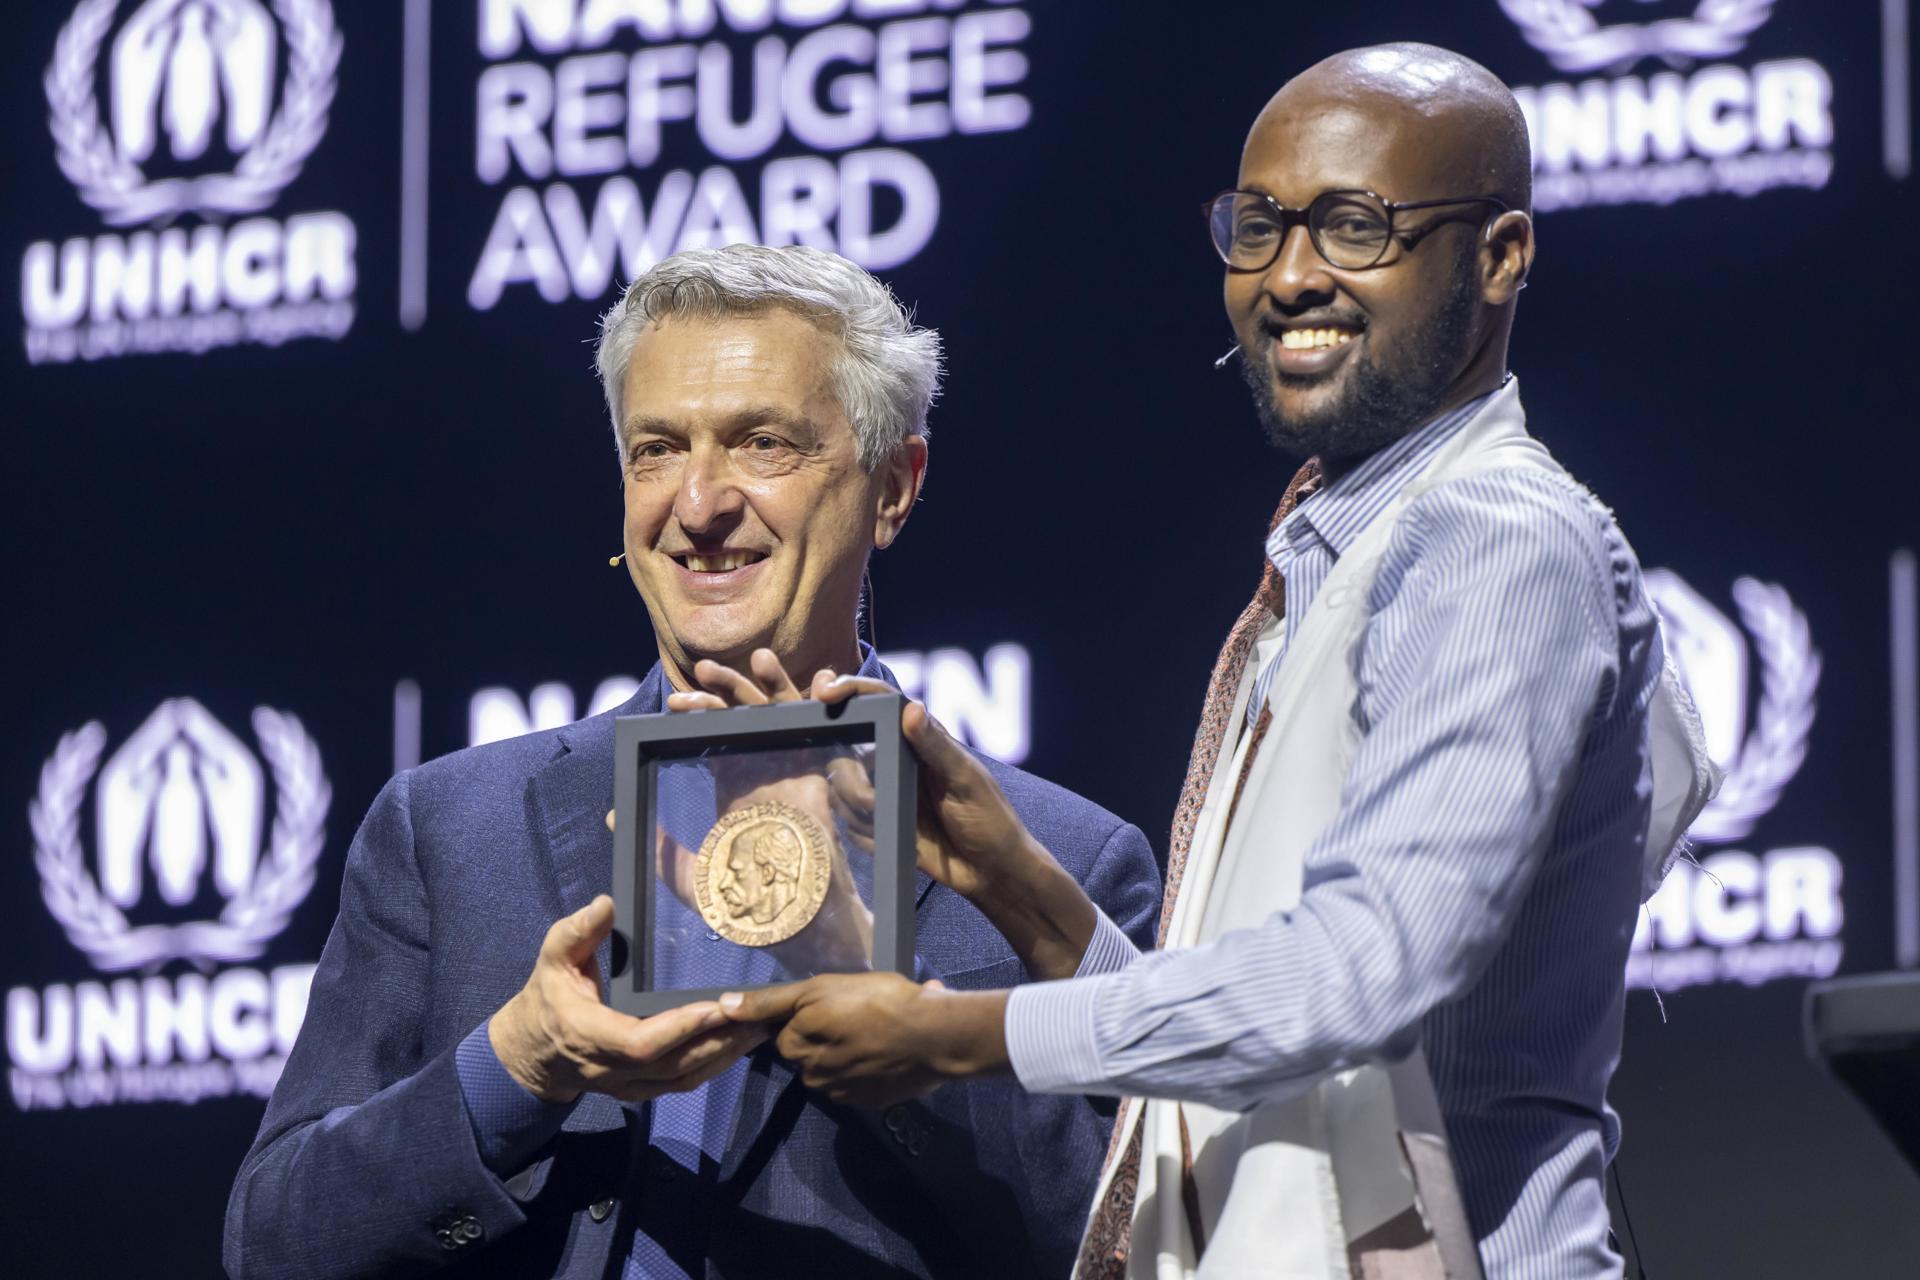 El antiguo refugiado somalí Abdullahi Mire recibe un premio junto a Filippo Grandi, alto comisionado de la ONU para los refugiados, en Ginebra. EFE/EPA/MARTIAL TREZZINI / POOL
